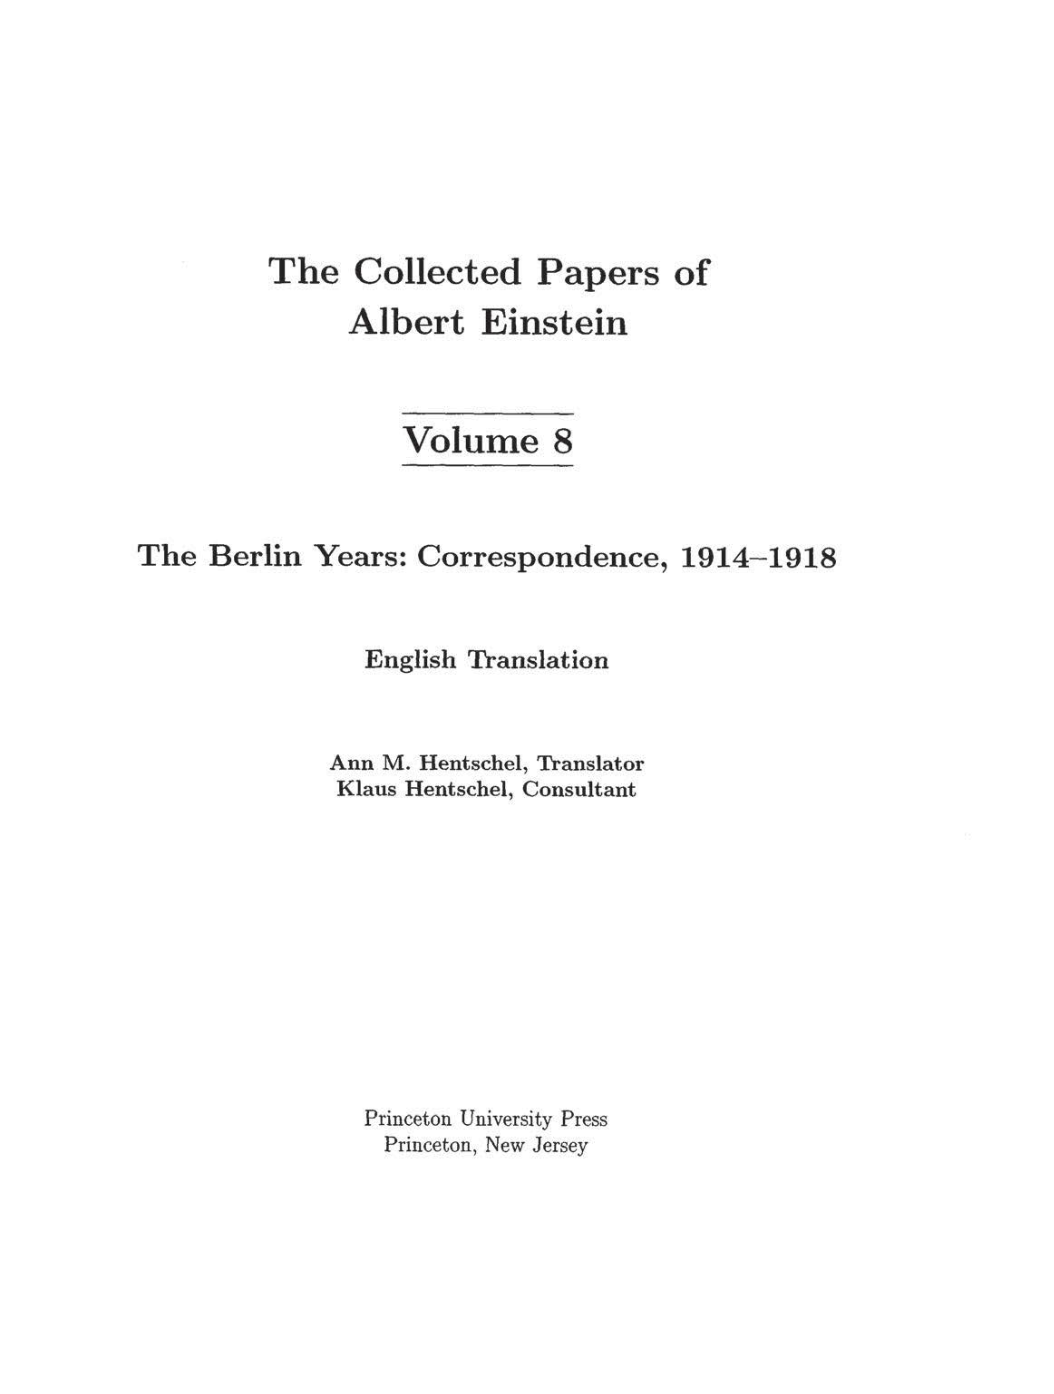 Volume 8: The Berlin Years: Correspondence, 1914-1918 (English translation supplement) page iii